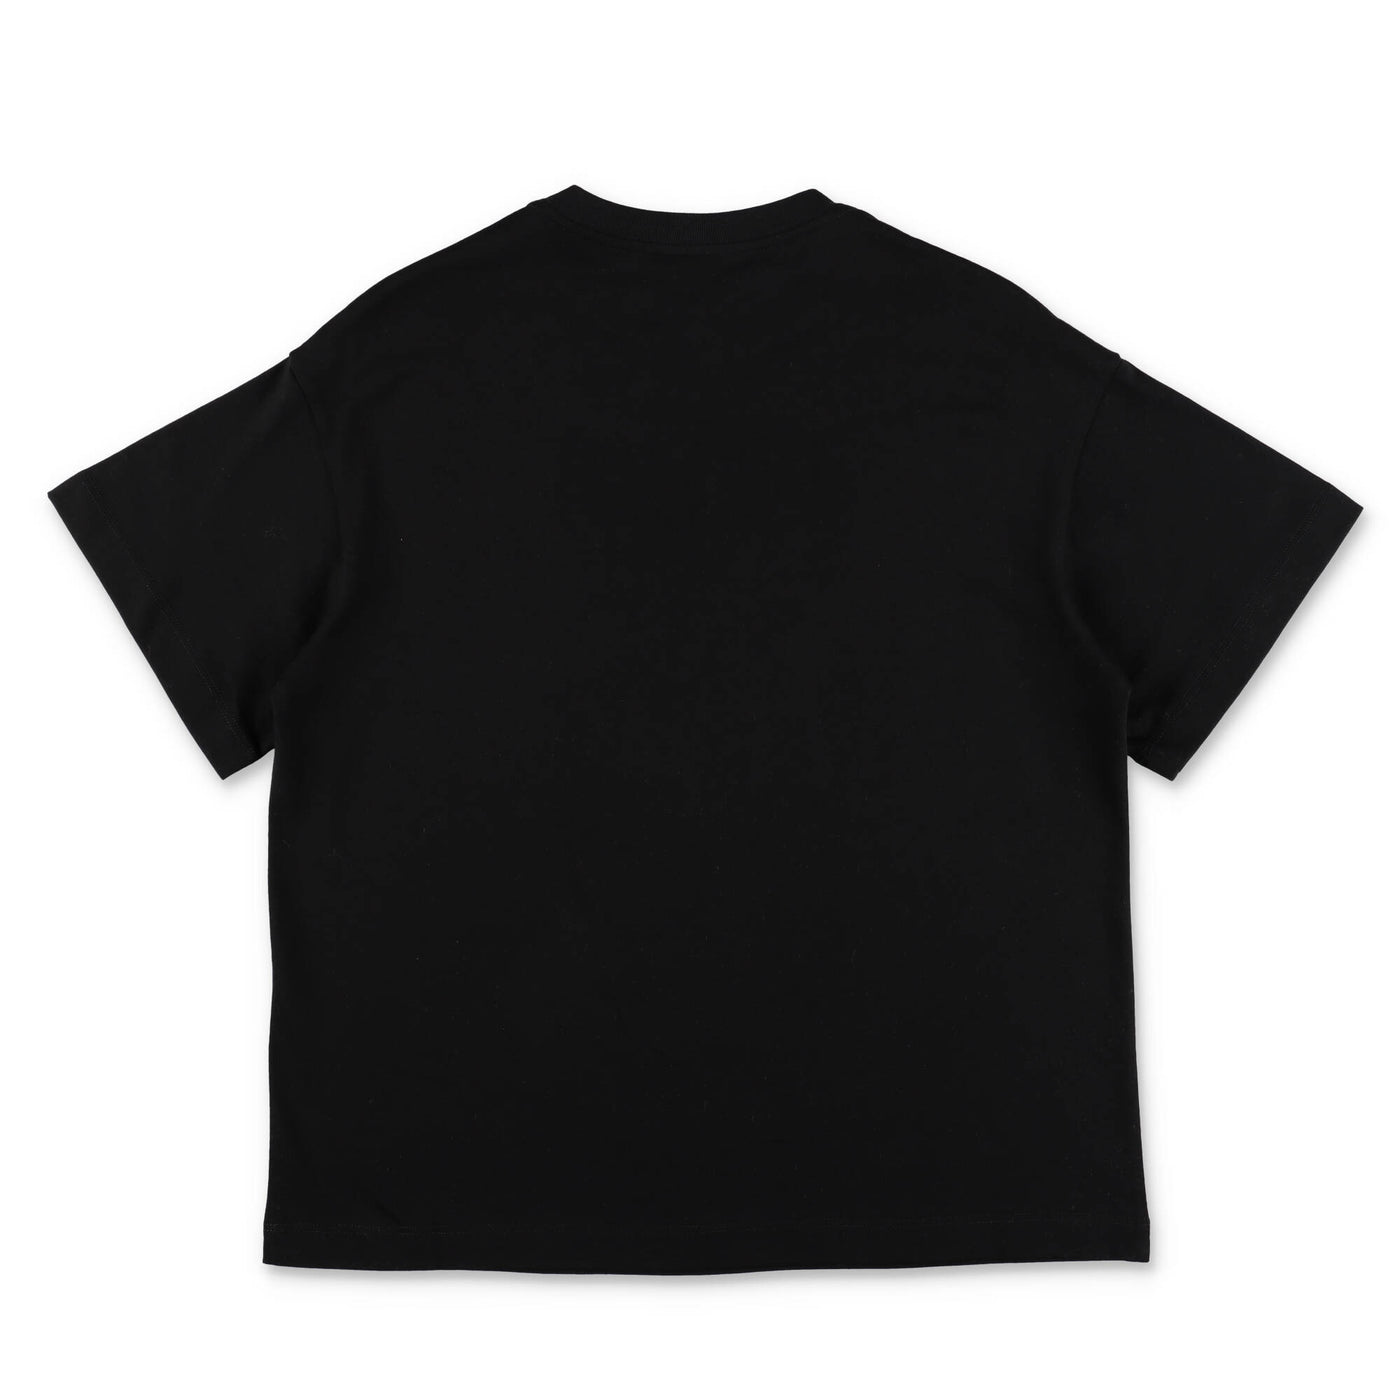 Black cotton jersey boy FENDI t-shirt | Carofiglio Junior